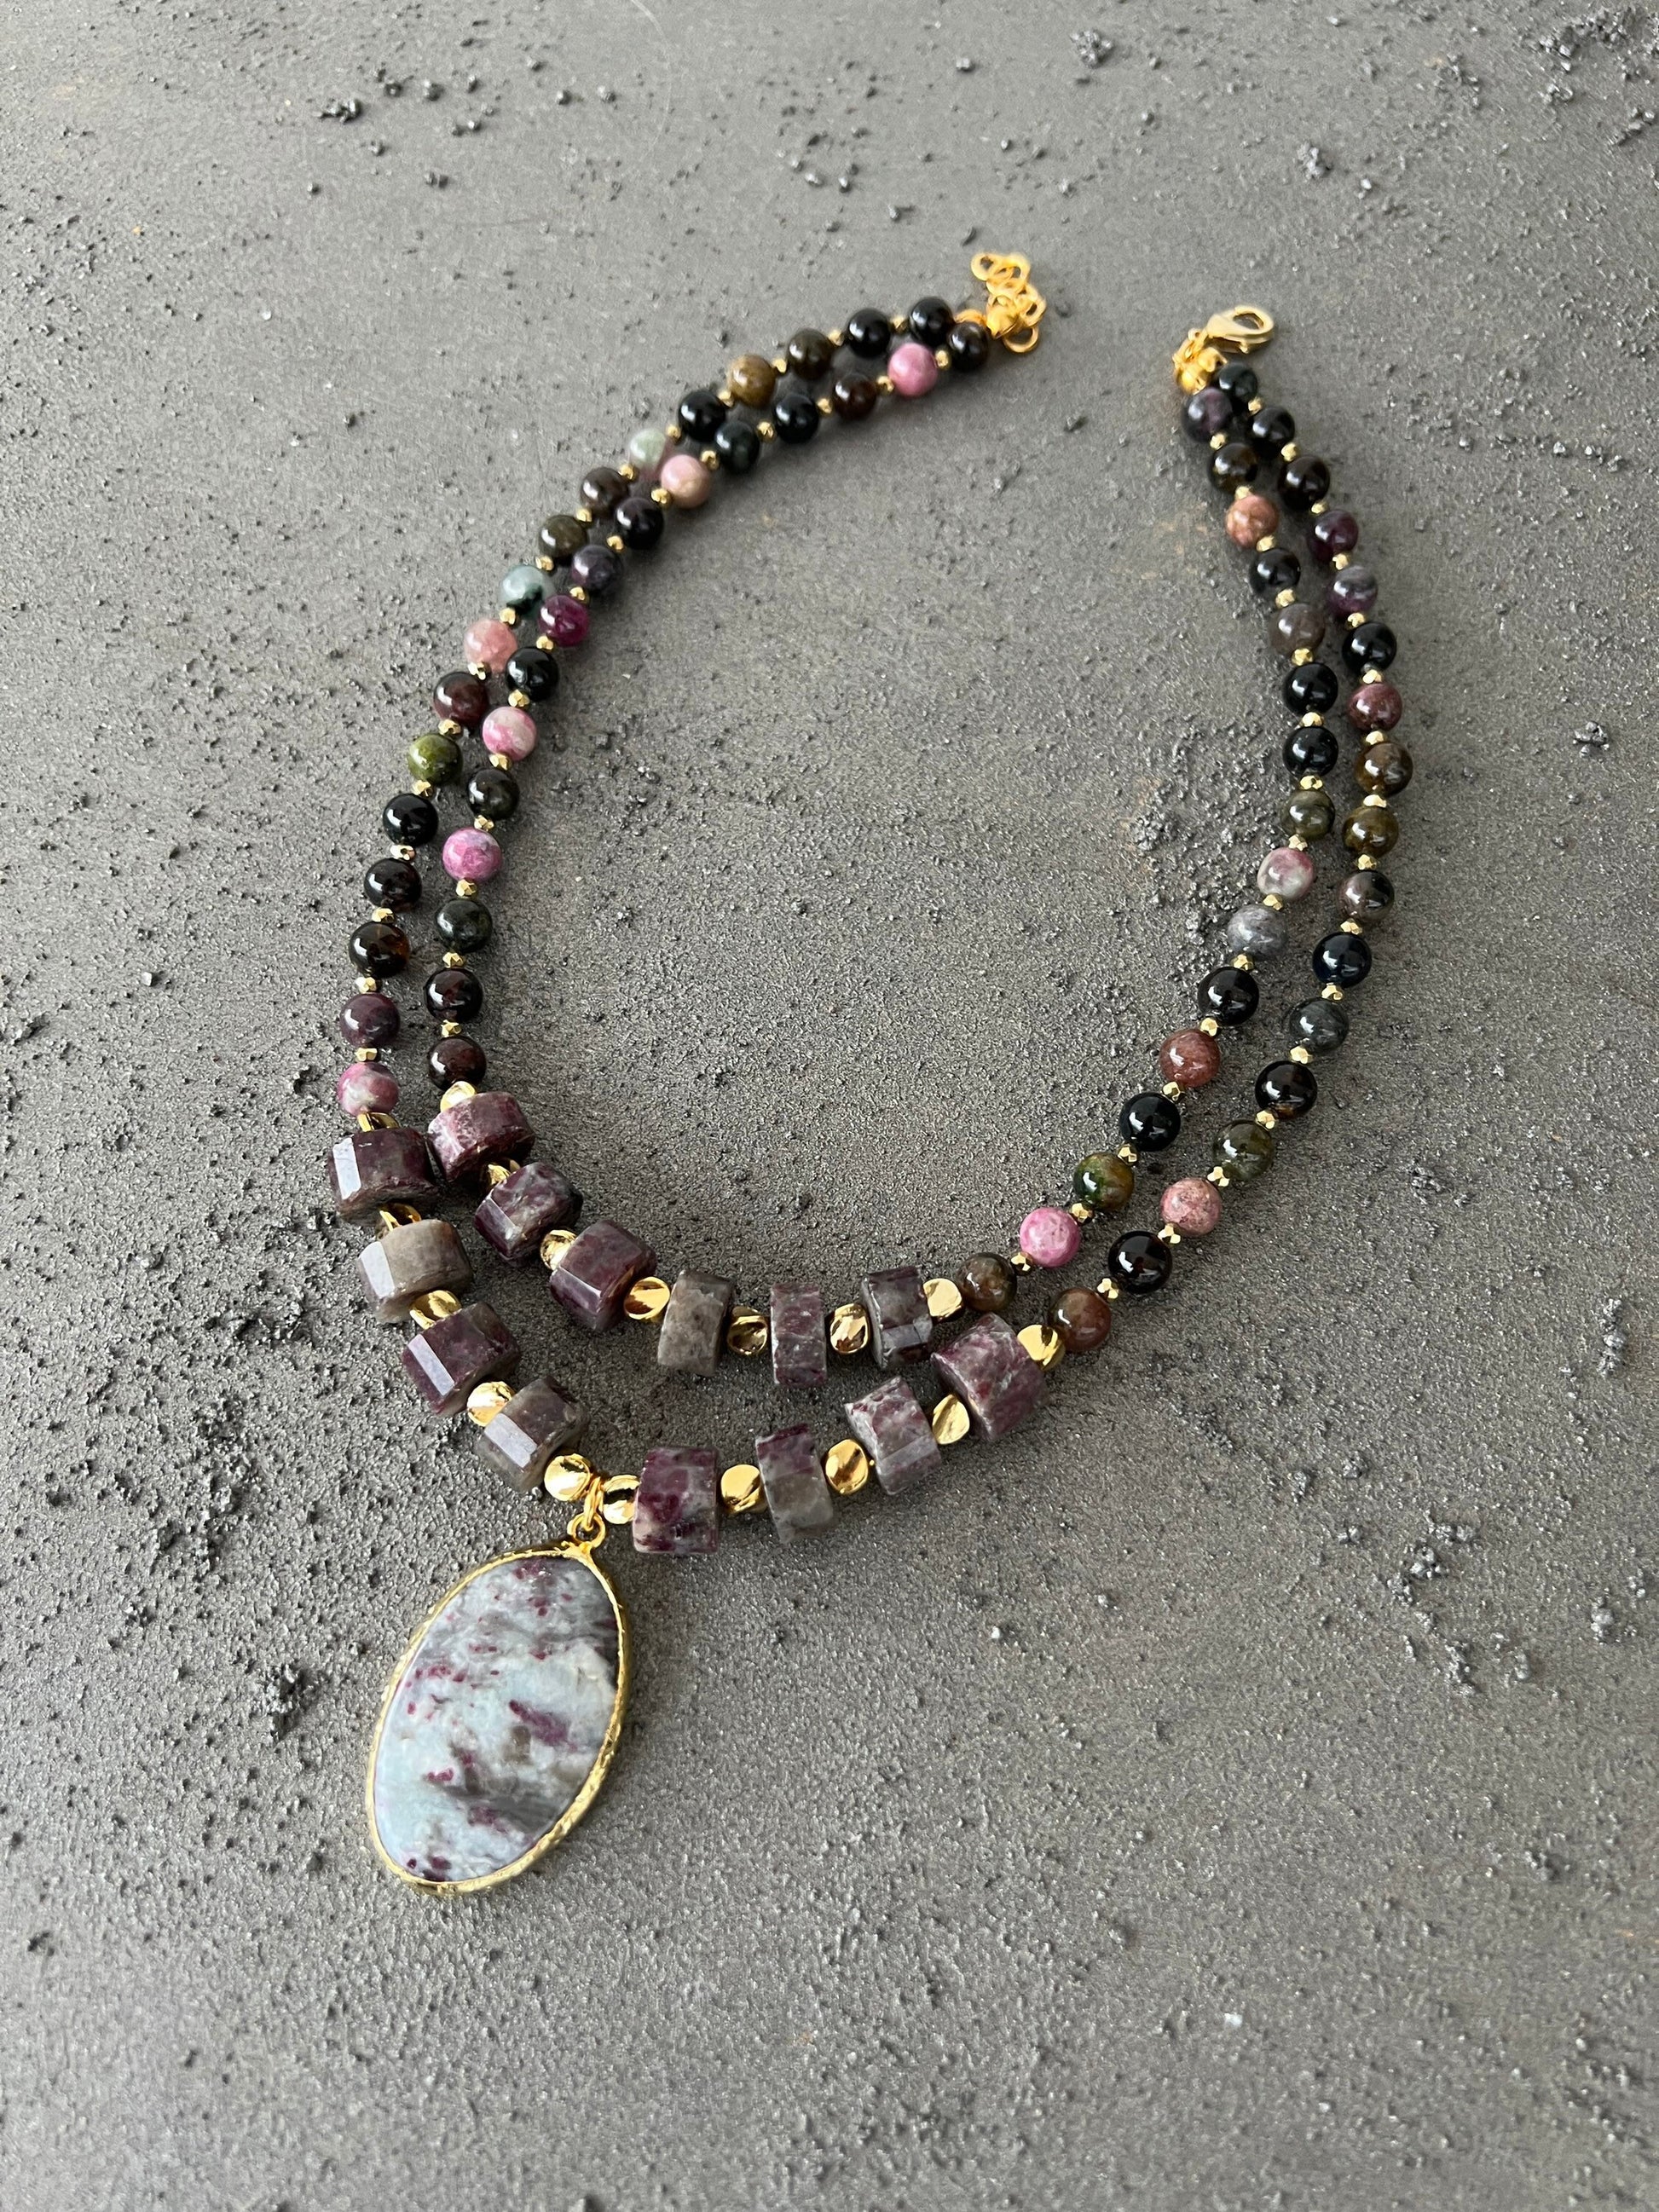 Tourmaline Necklace, Unique Beaded Handmade Jewelry, Gemstone Jewelry, Christmas Gift for Women, Choker Pendant Necklace, Big Bold Statement